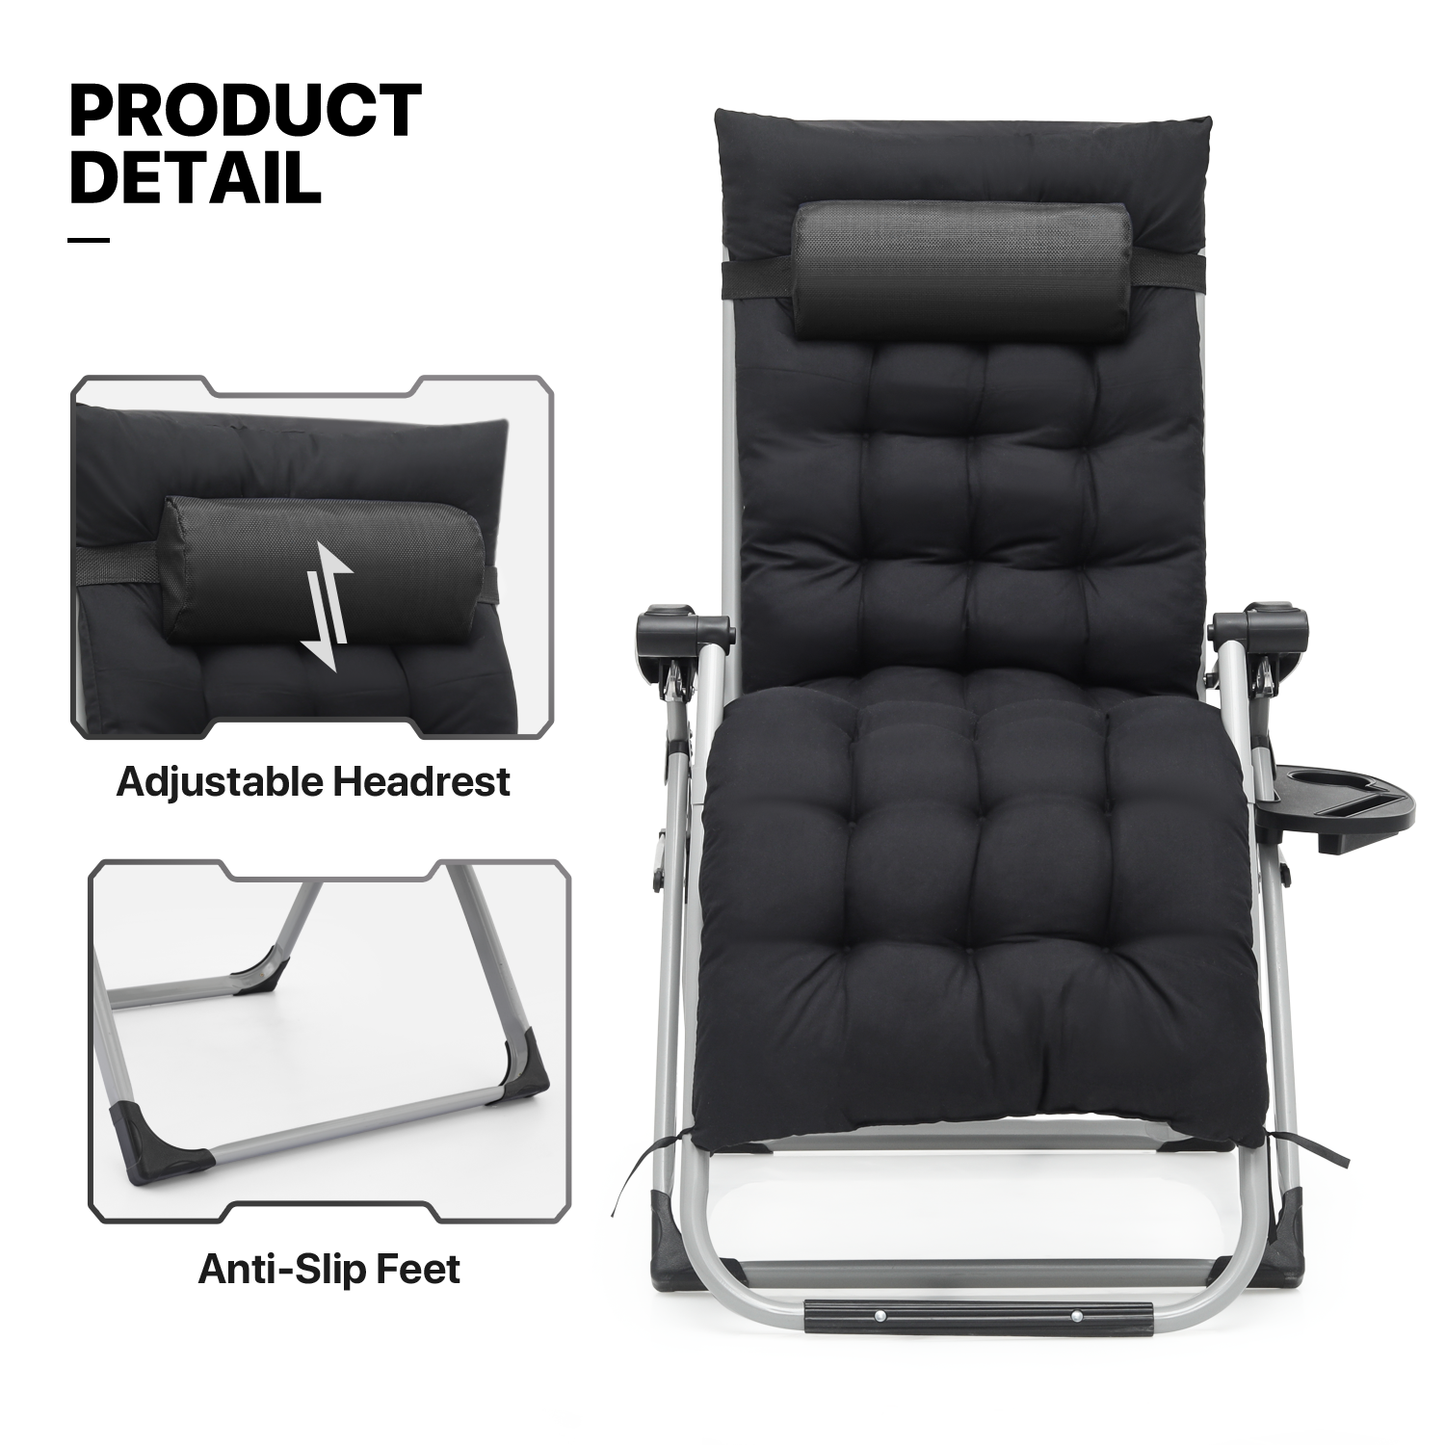 Folding Zero Gravity Chair 20.5"x28"x44" - Detachable Cushion & Headrest